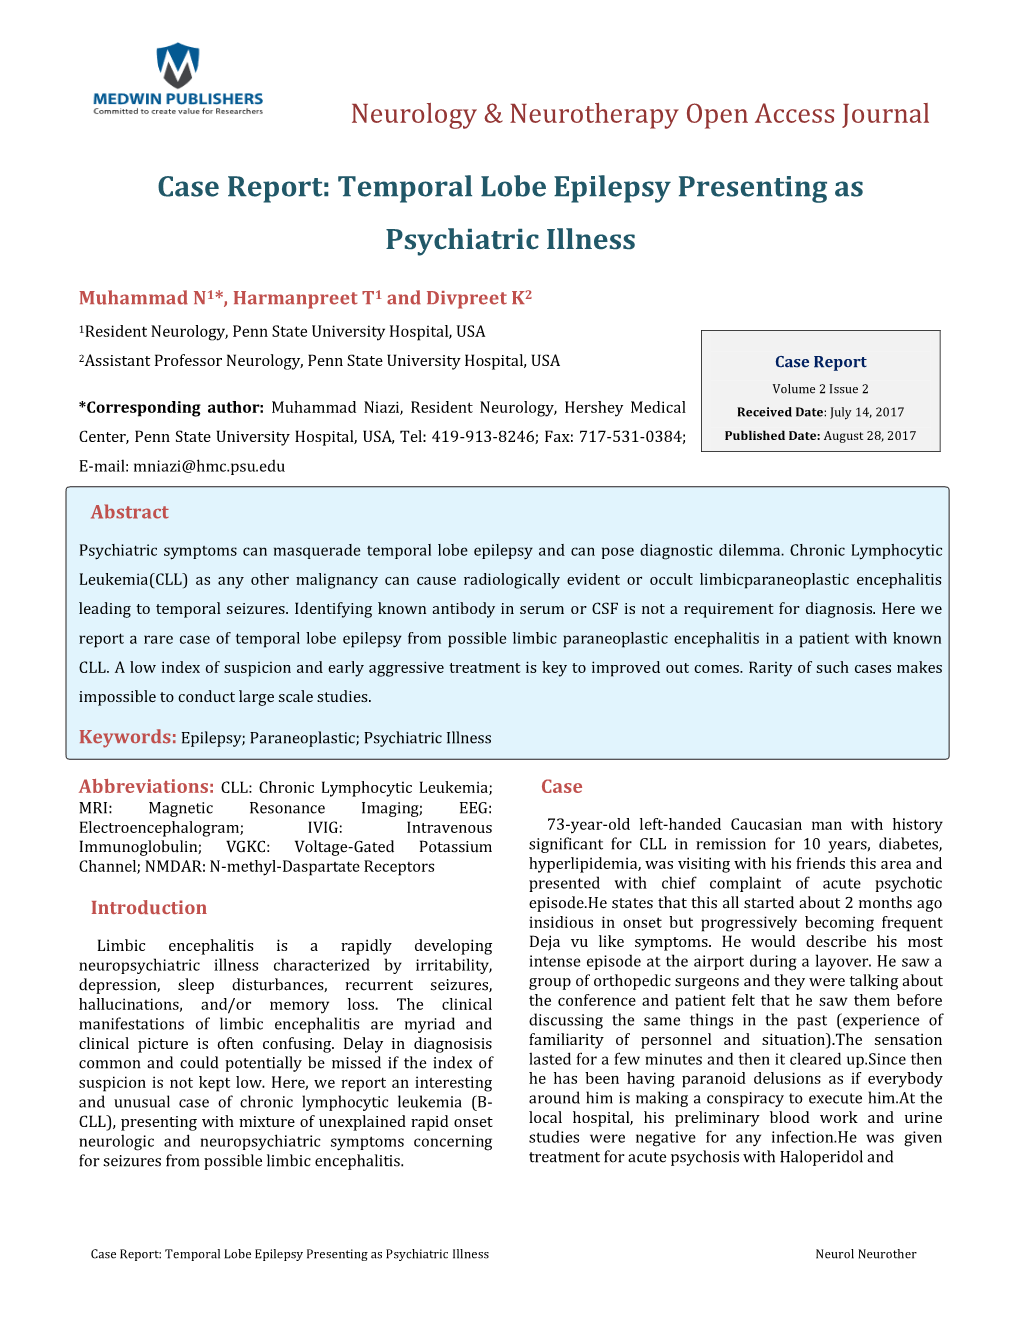 Temporal Lobe Epilepsy Presenting As Psychiatric Illness